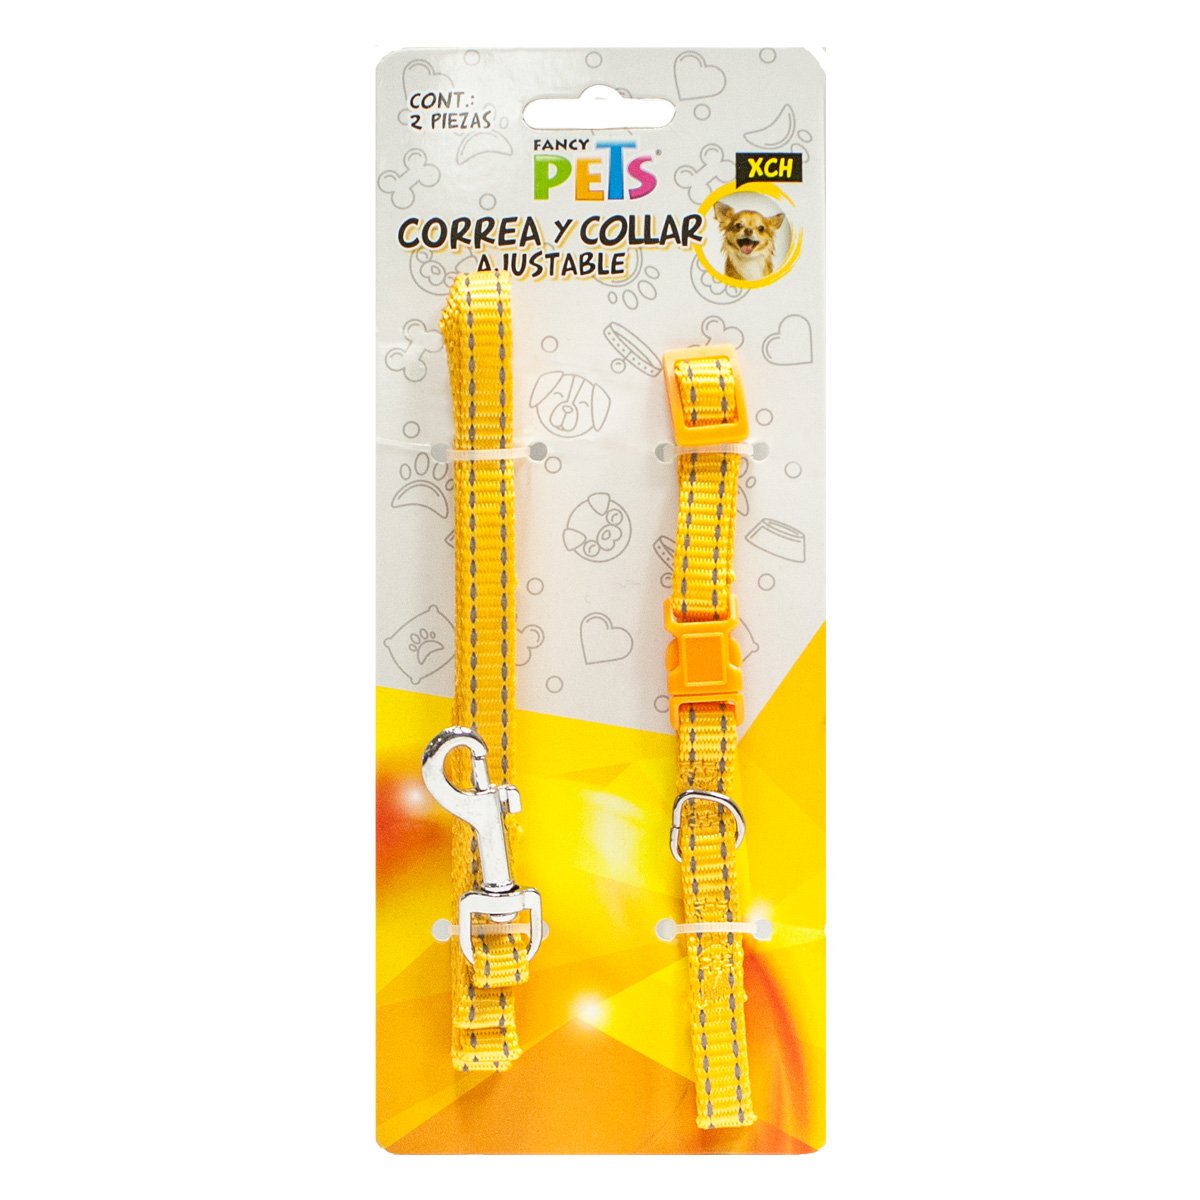 Correa/collar Nylon Bandas Reflejantes Xch Fancy Pets Mod. Fl8709